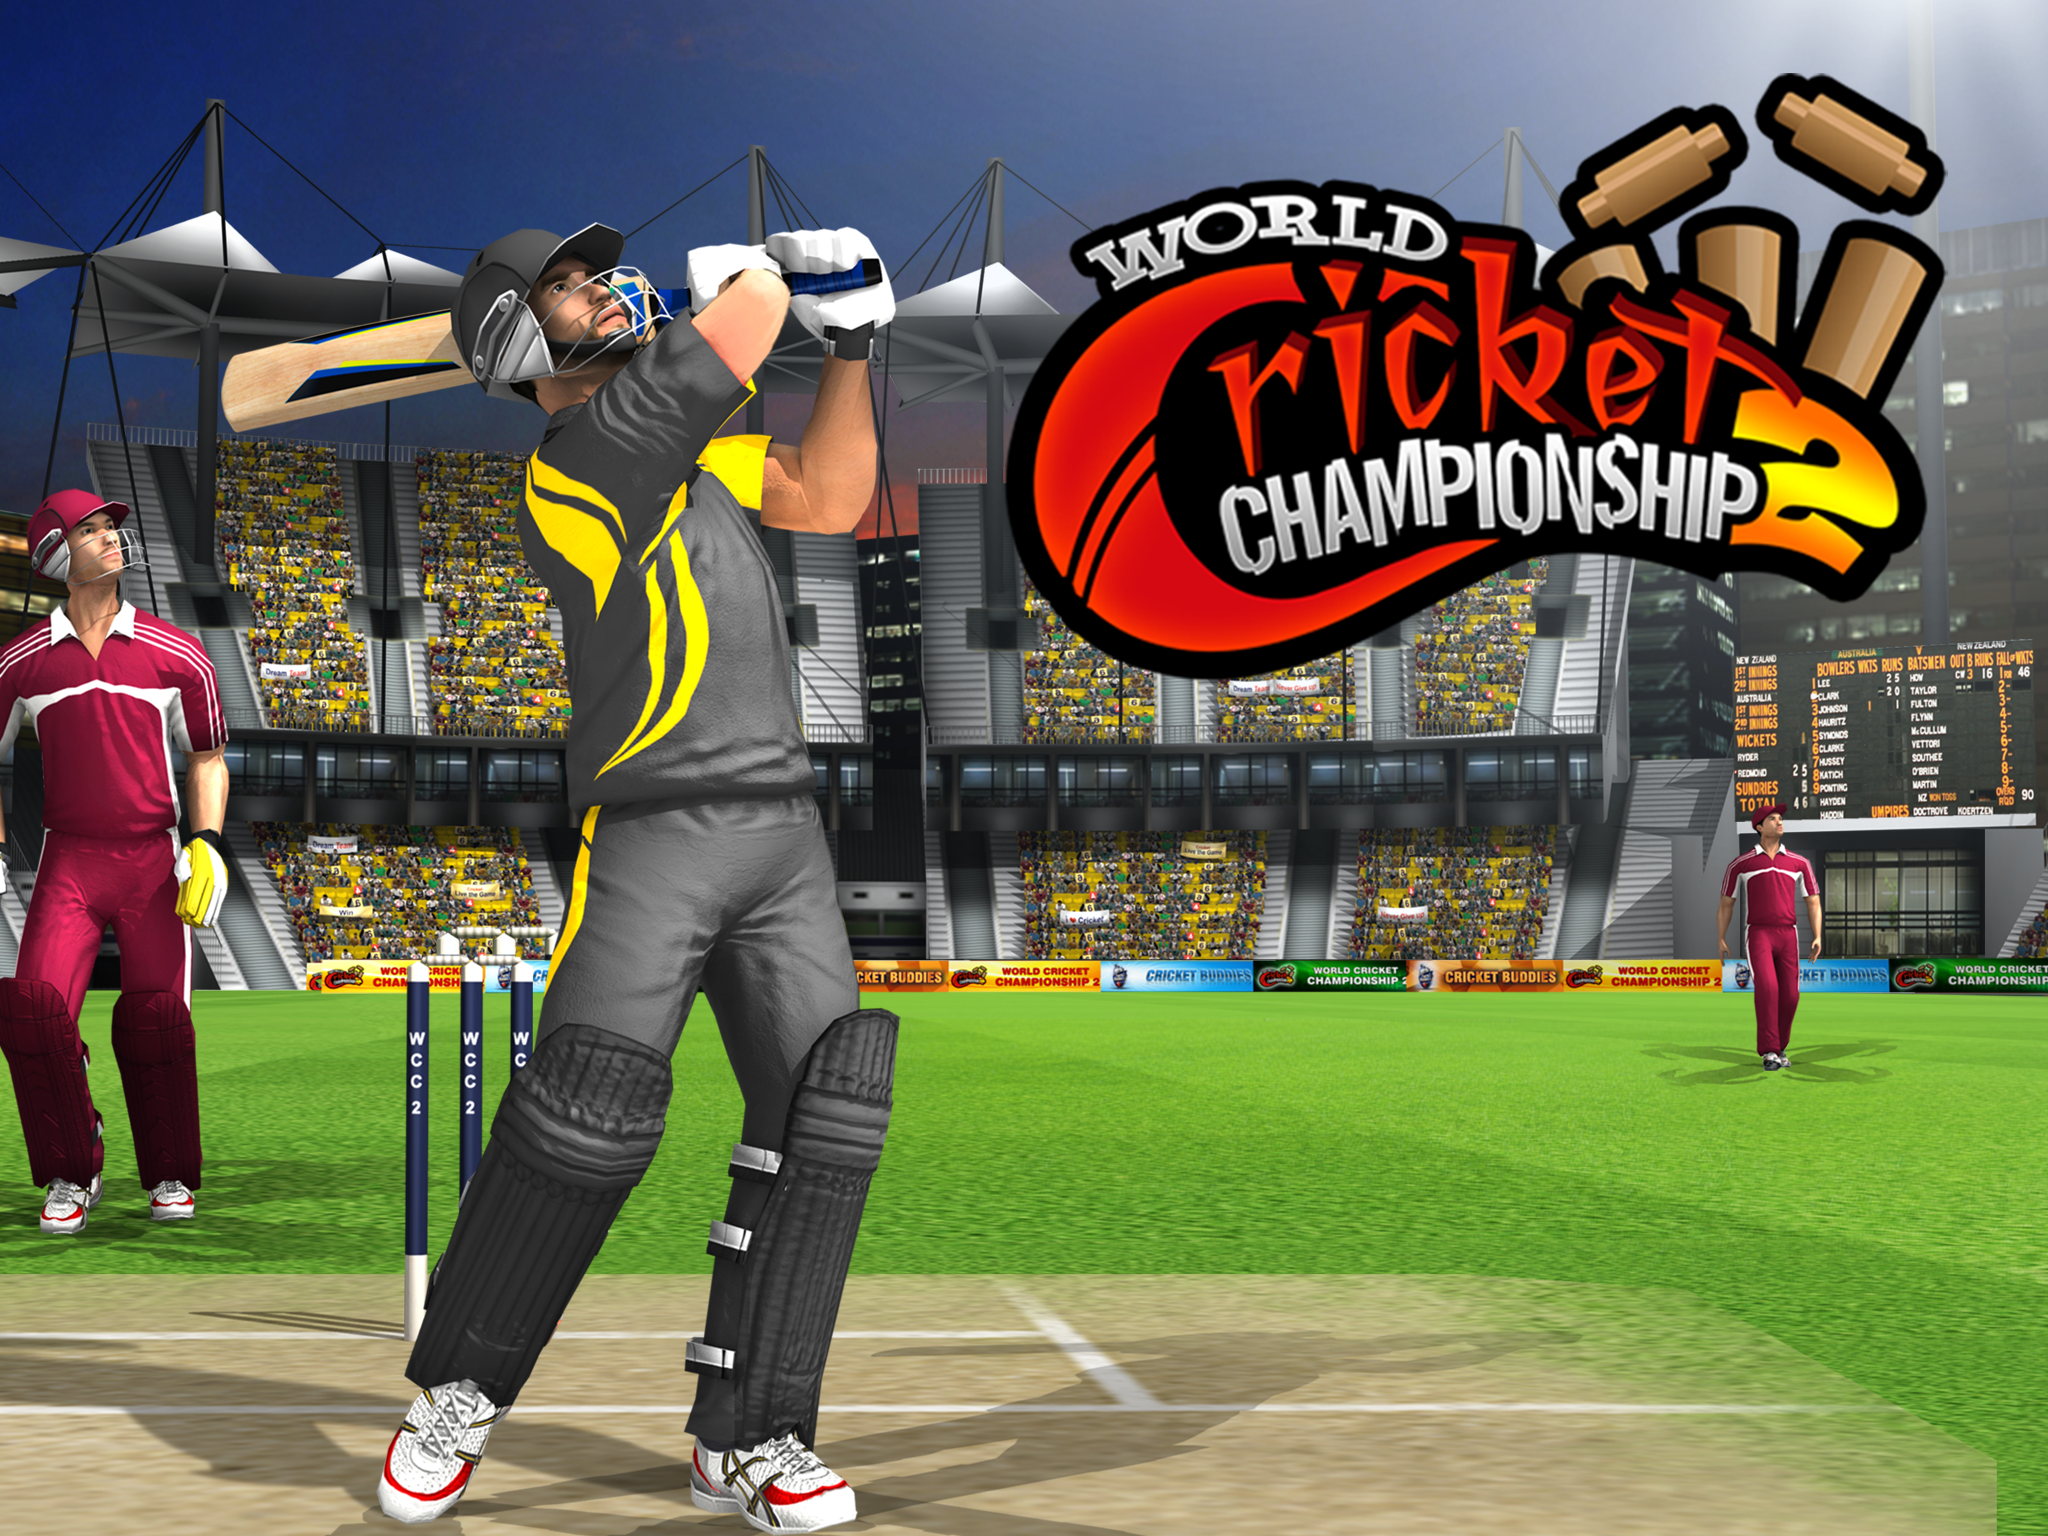 HACK World Cricket Championship 2 APK .com